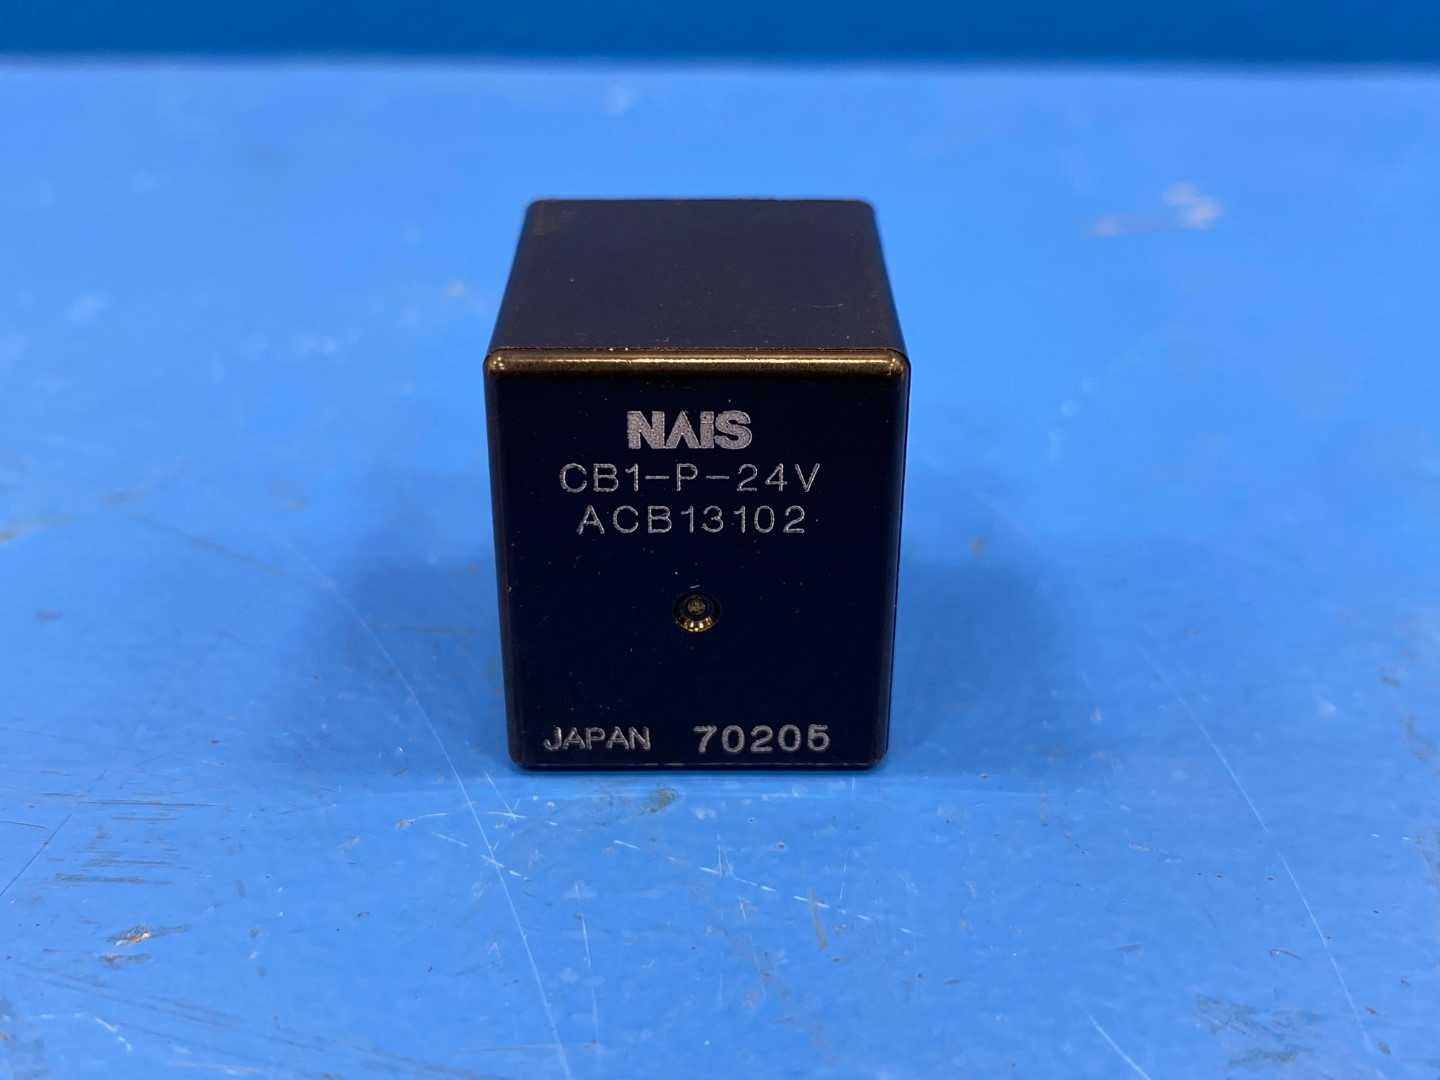 NAiS CB-Relay CB1-P-24V ACB13102 - 1 relay only, not the box